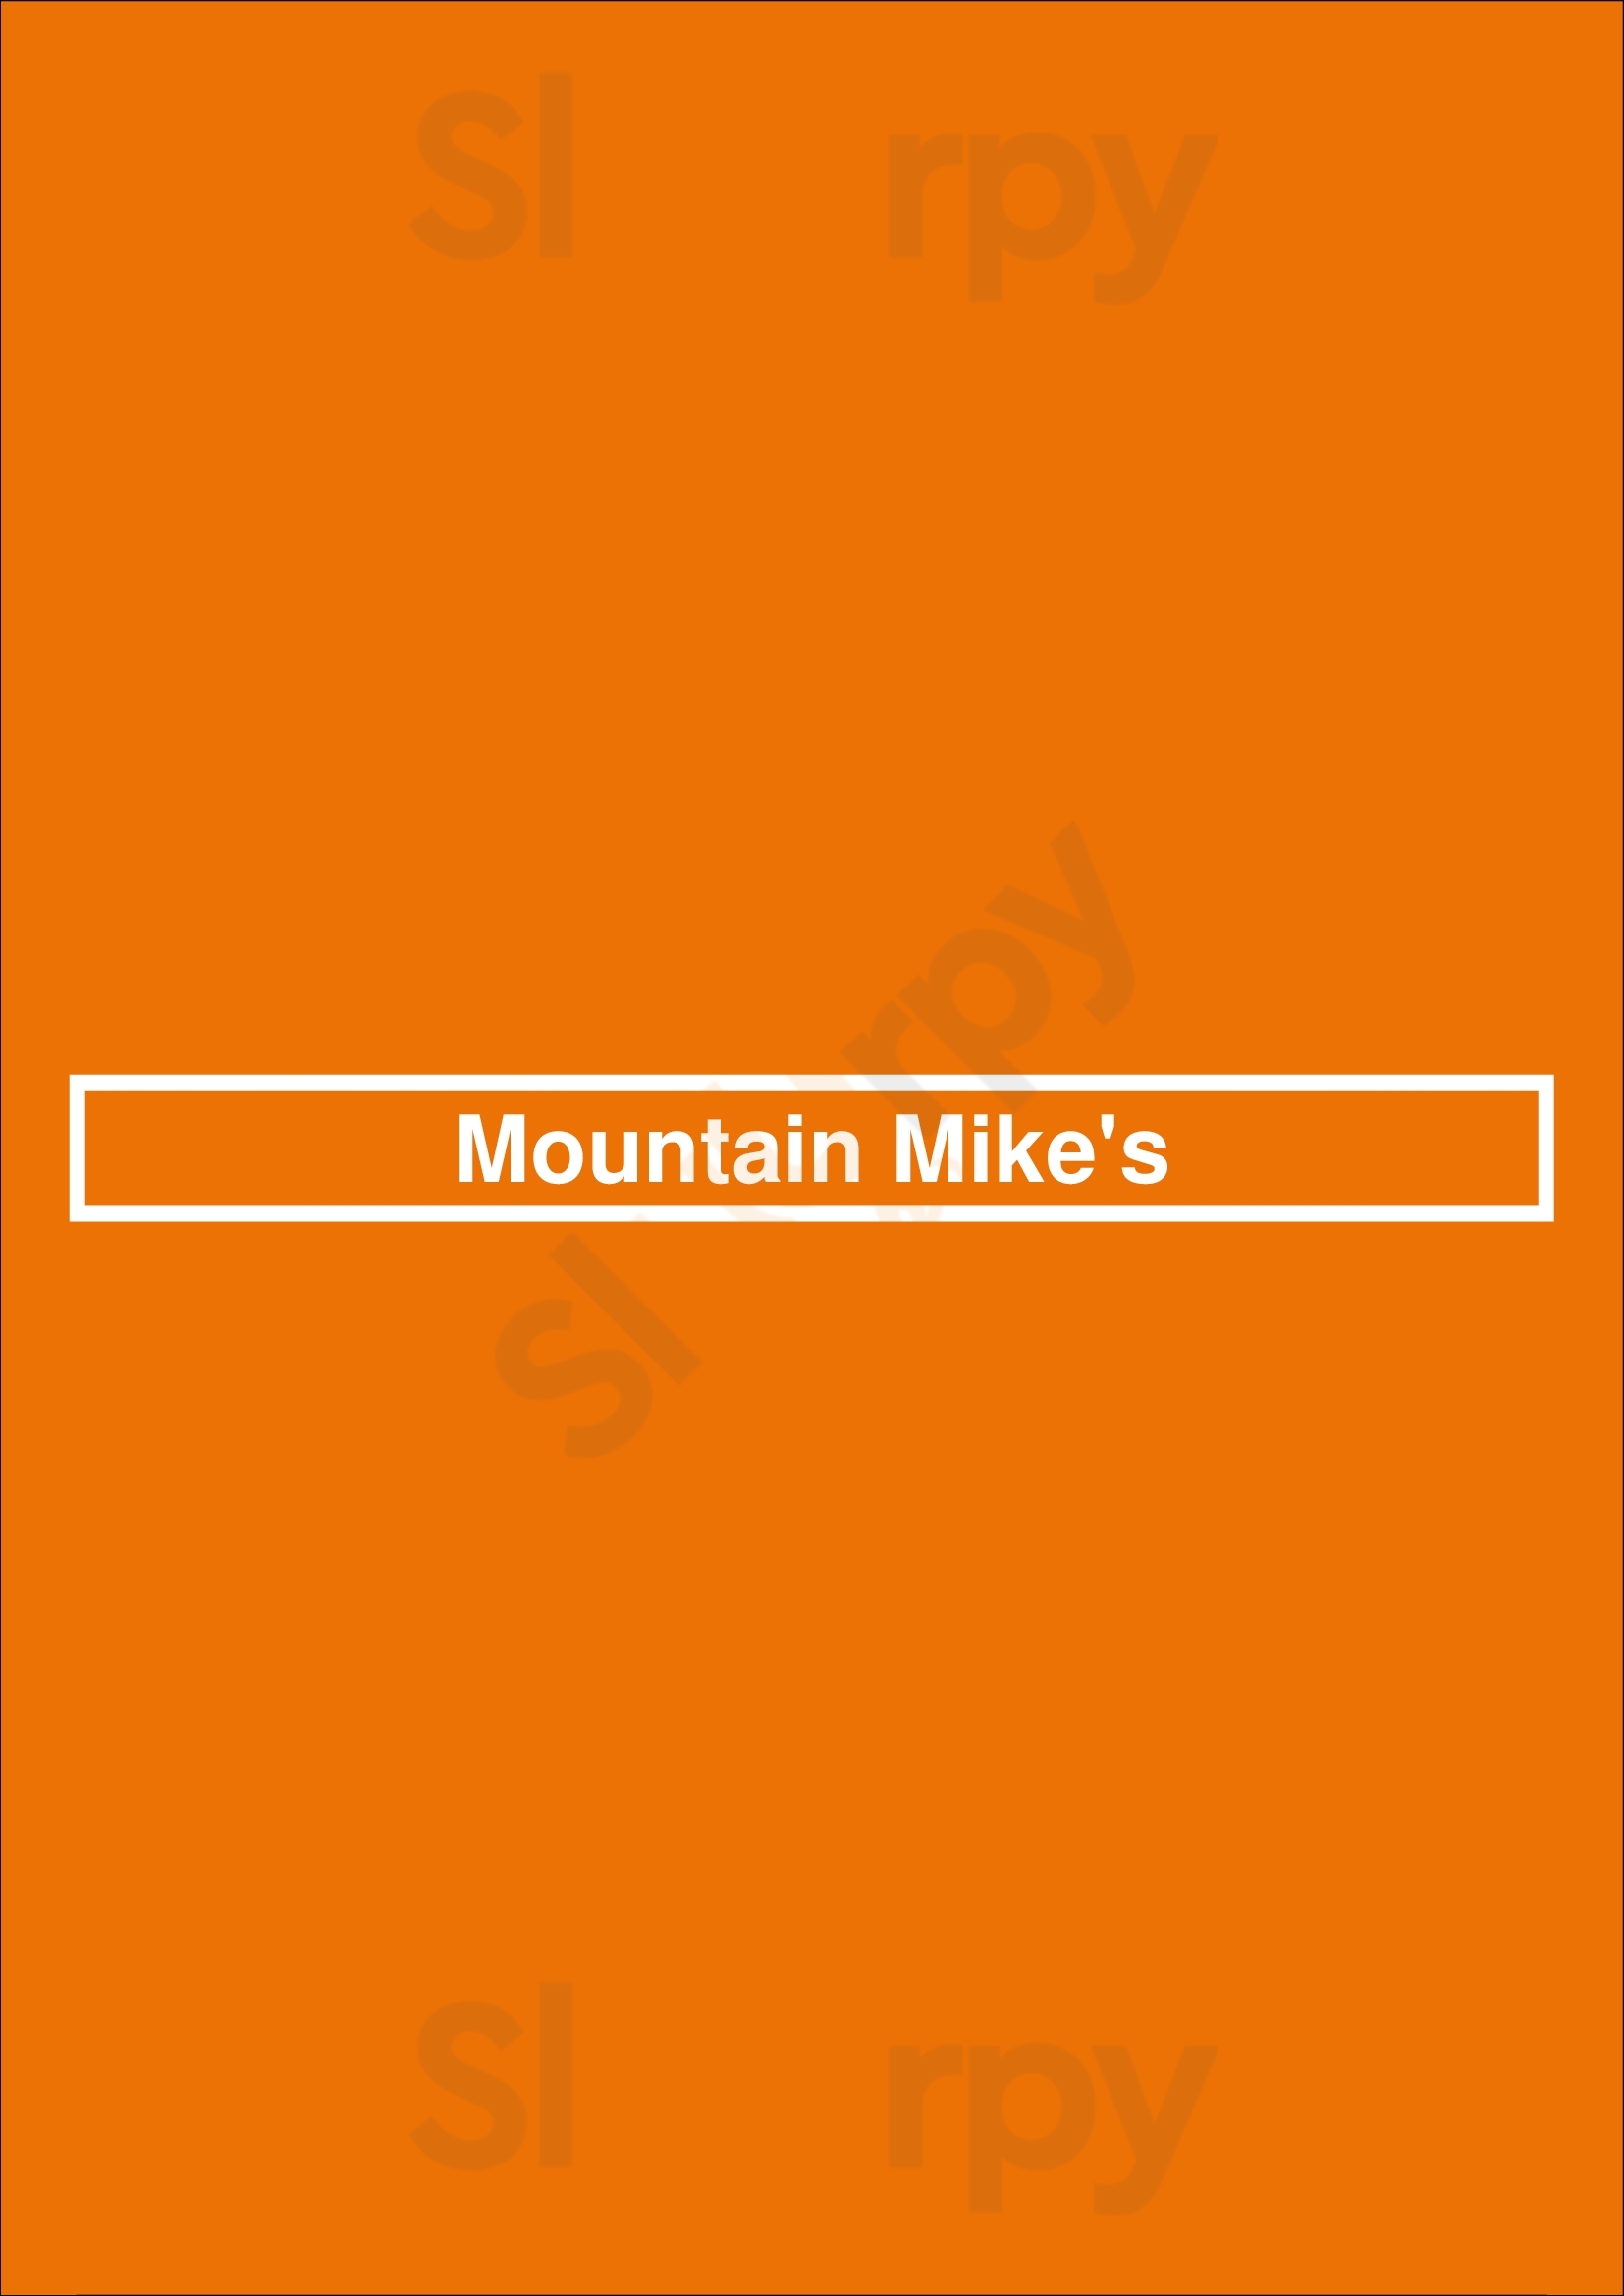 Mountain Mike's Sacramento Menu - 1